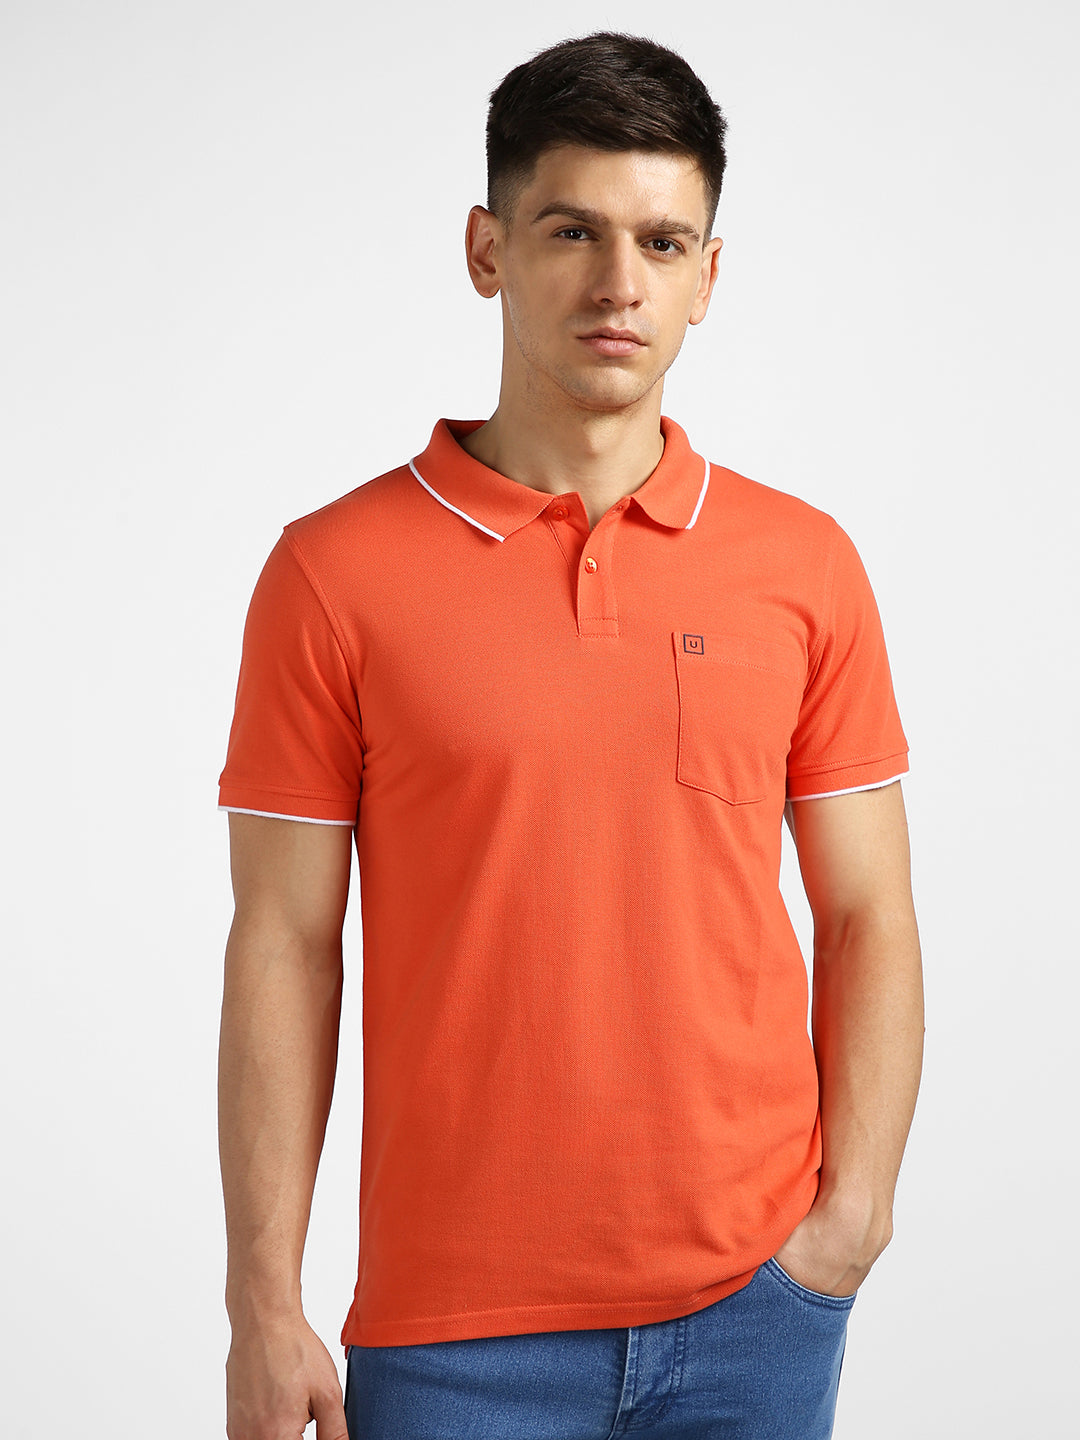 Urbano Fashion Men's Orange Solid Slim Fit Half Sleeve Cotton Polo T-Shirt